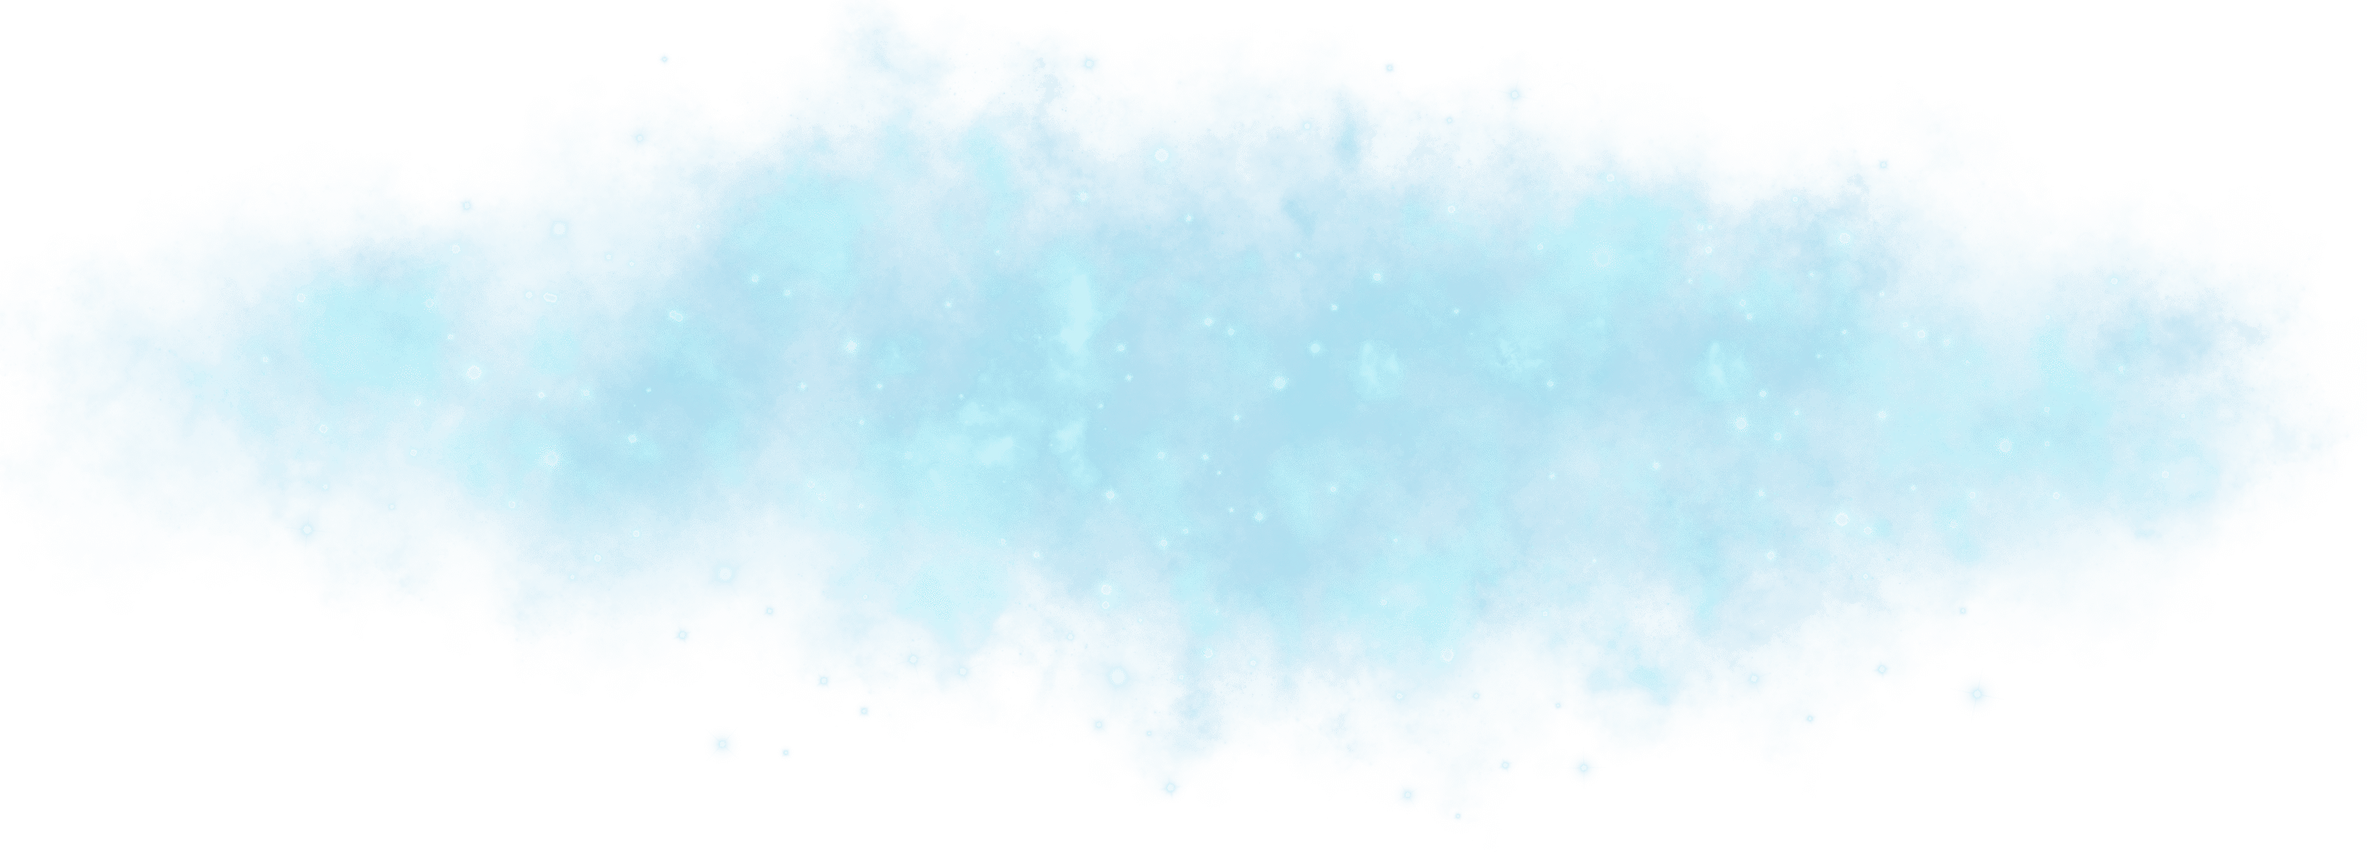 Blue galaxy cloud overlay